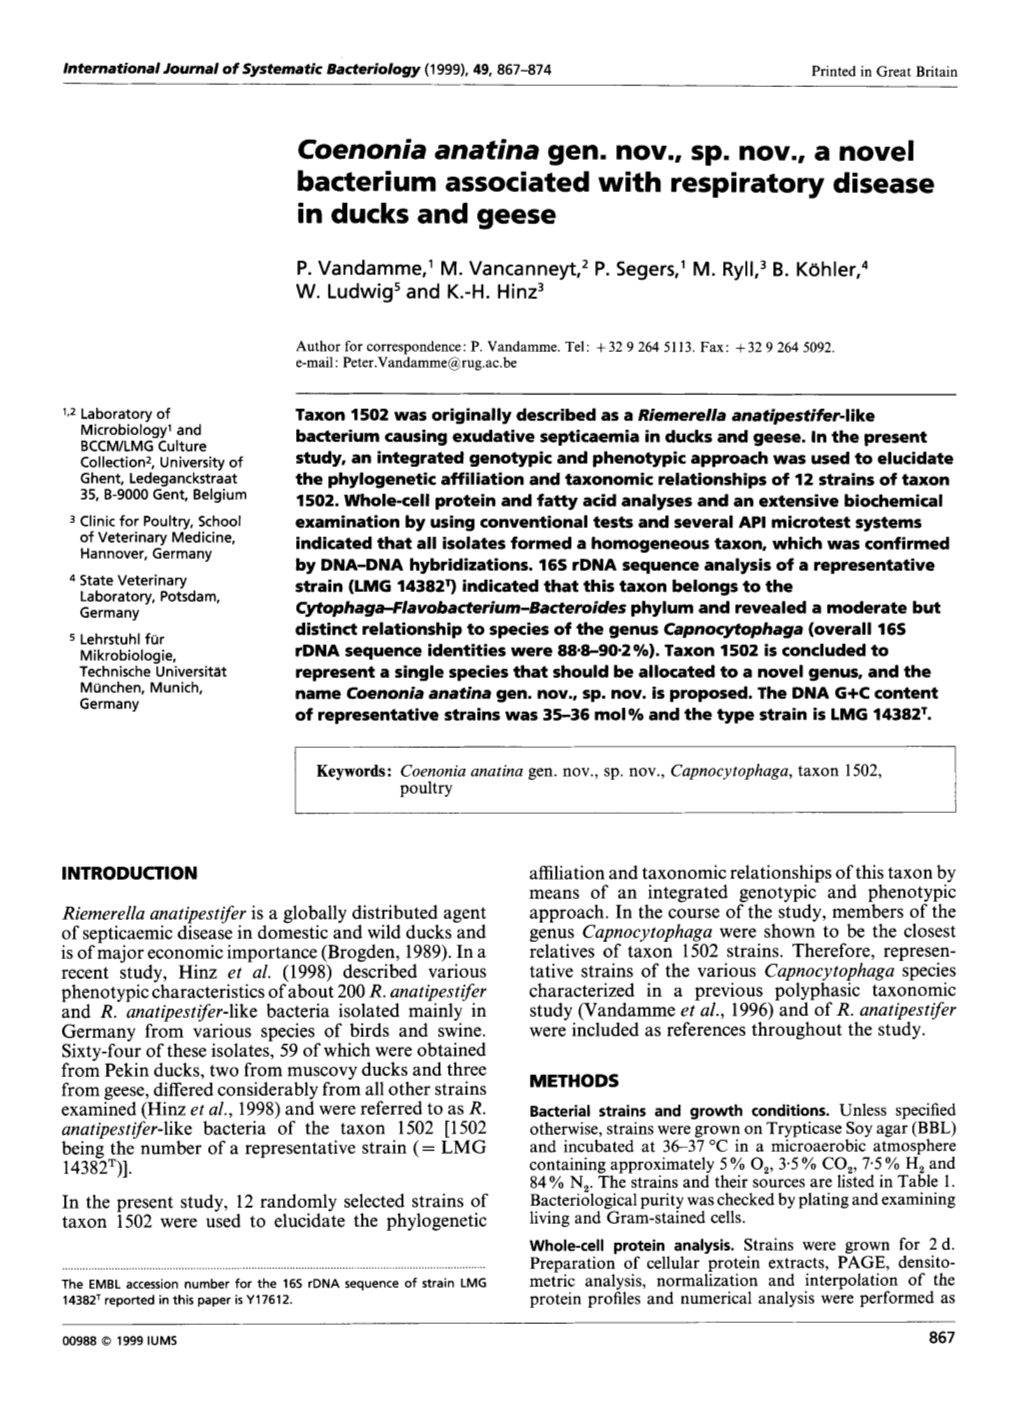 Coenonia Anatina Gen. Nov., Sp. Nov., a Novel Bacterium Associated with Respiratory Disease in Ducks and Geese